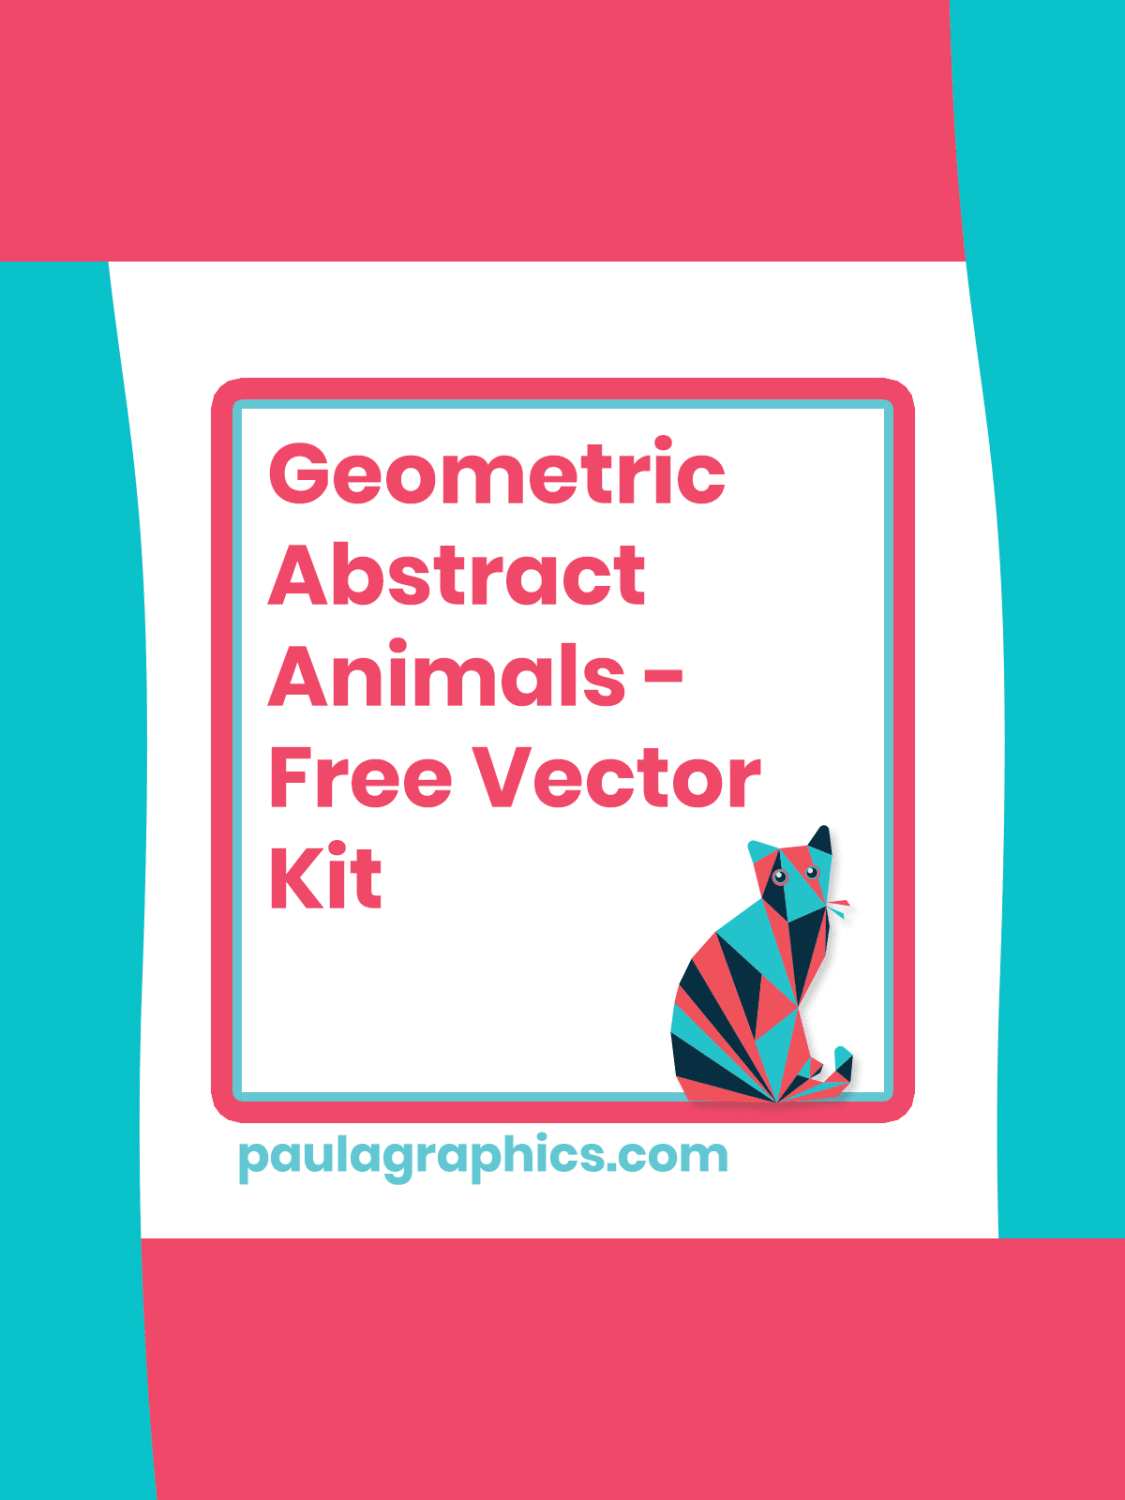 Geometric Abstract Animals - Free Vector Kit